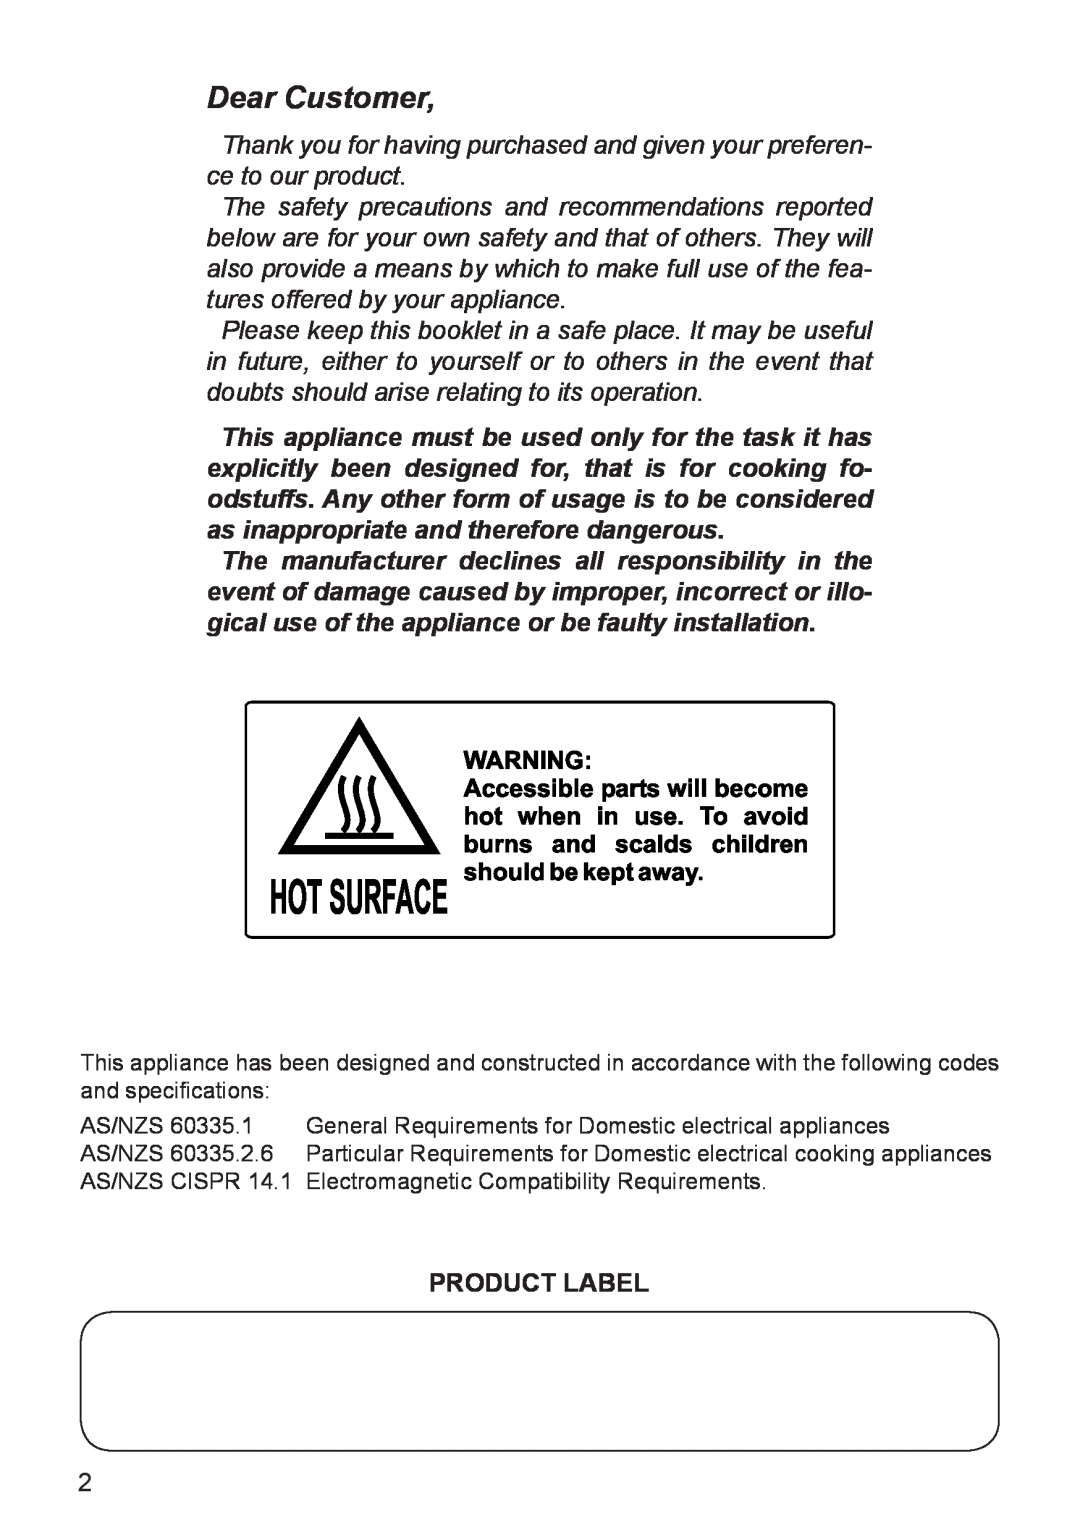 DeLonghi DEF905E manual Dear Customer, Product Label 